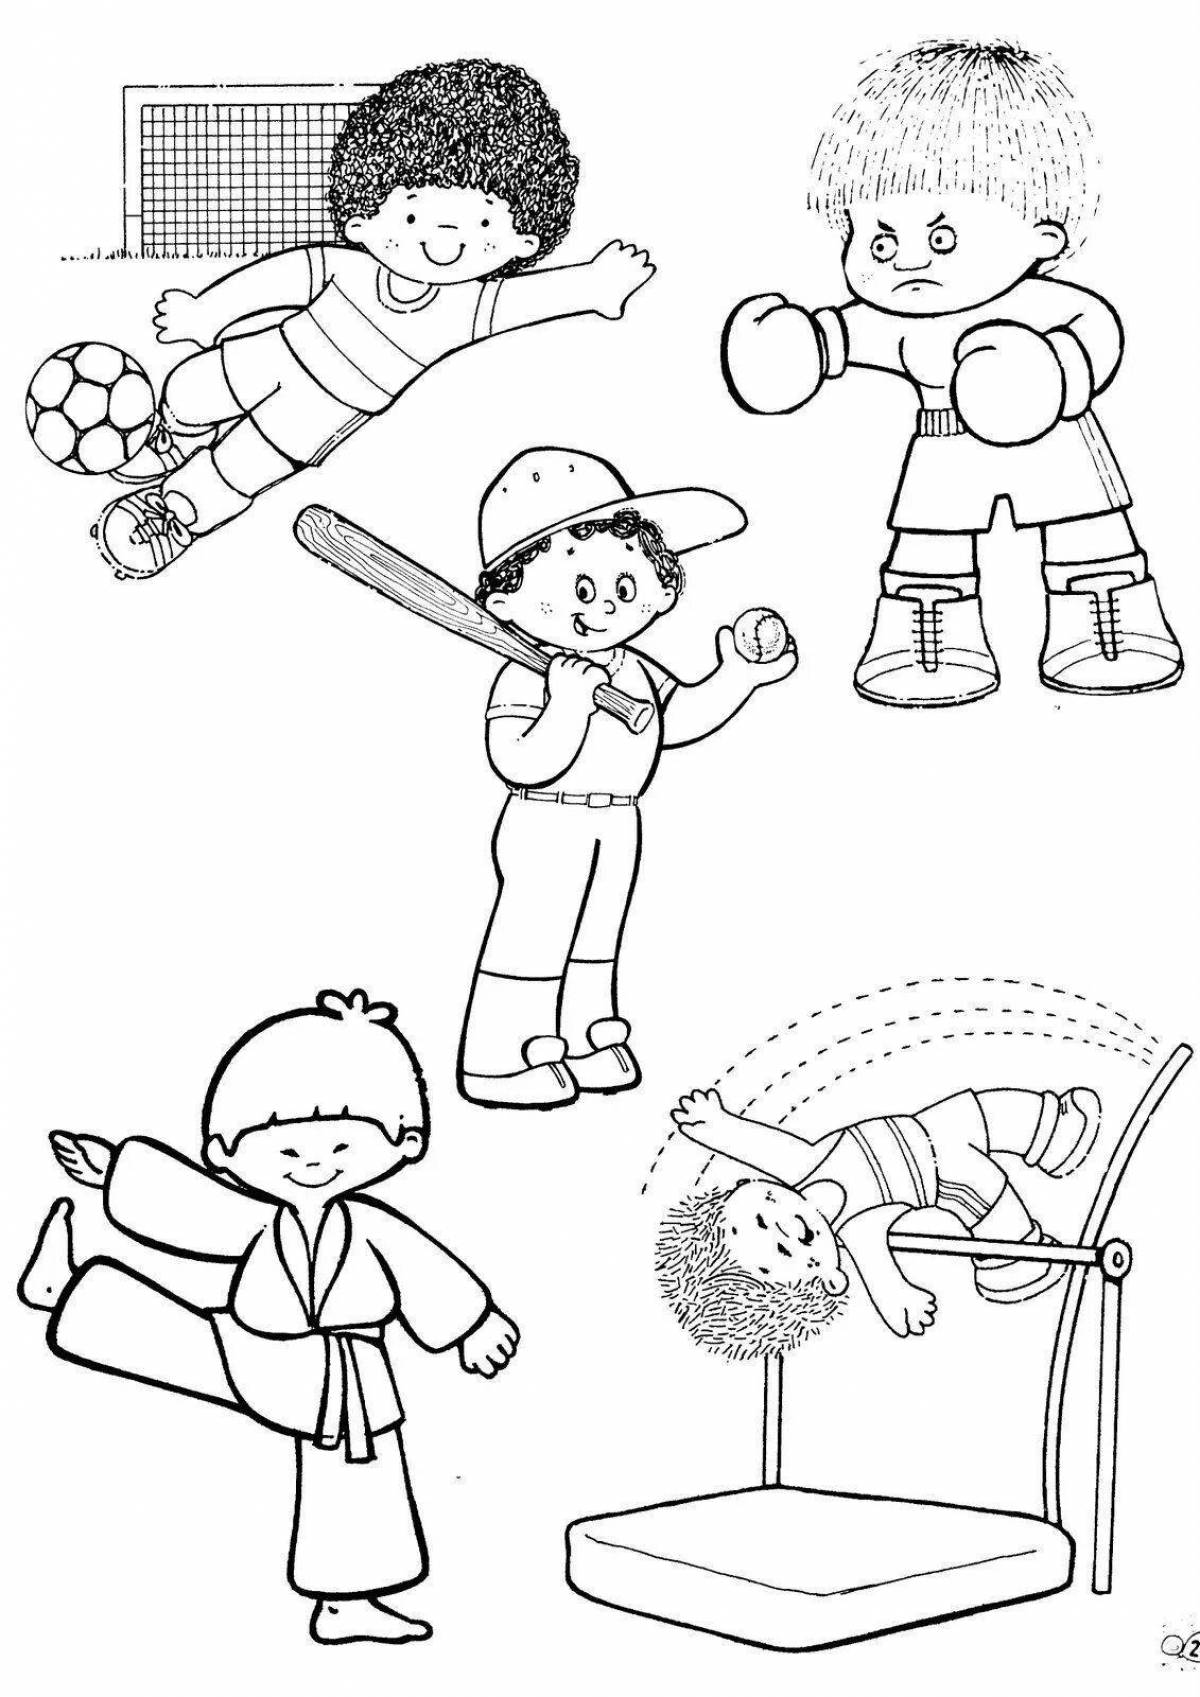 Fun coloring book for preschool children